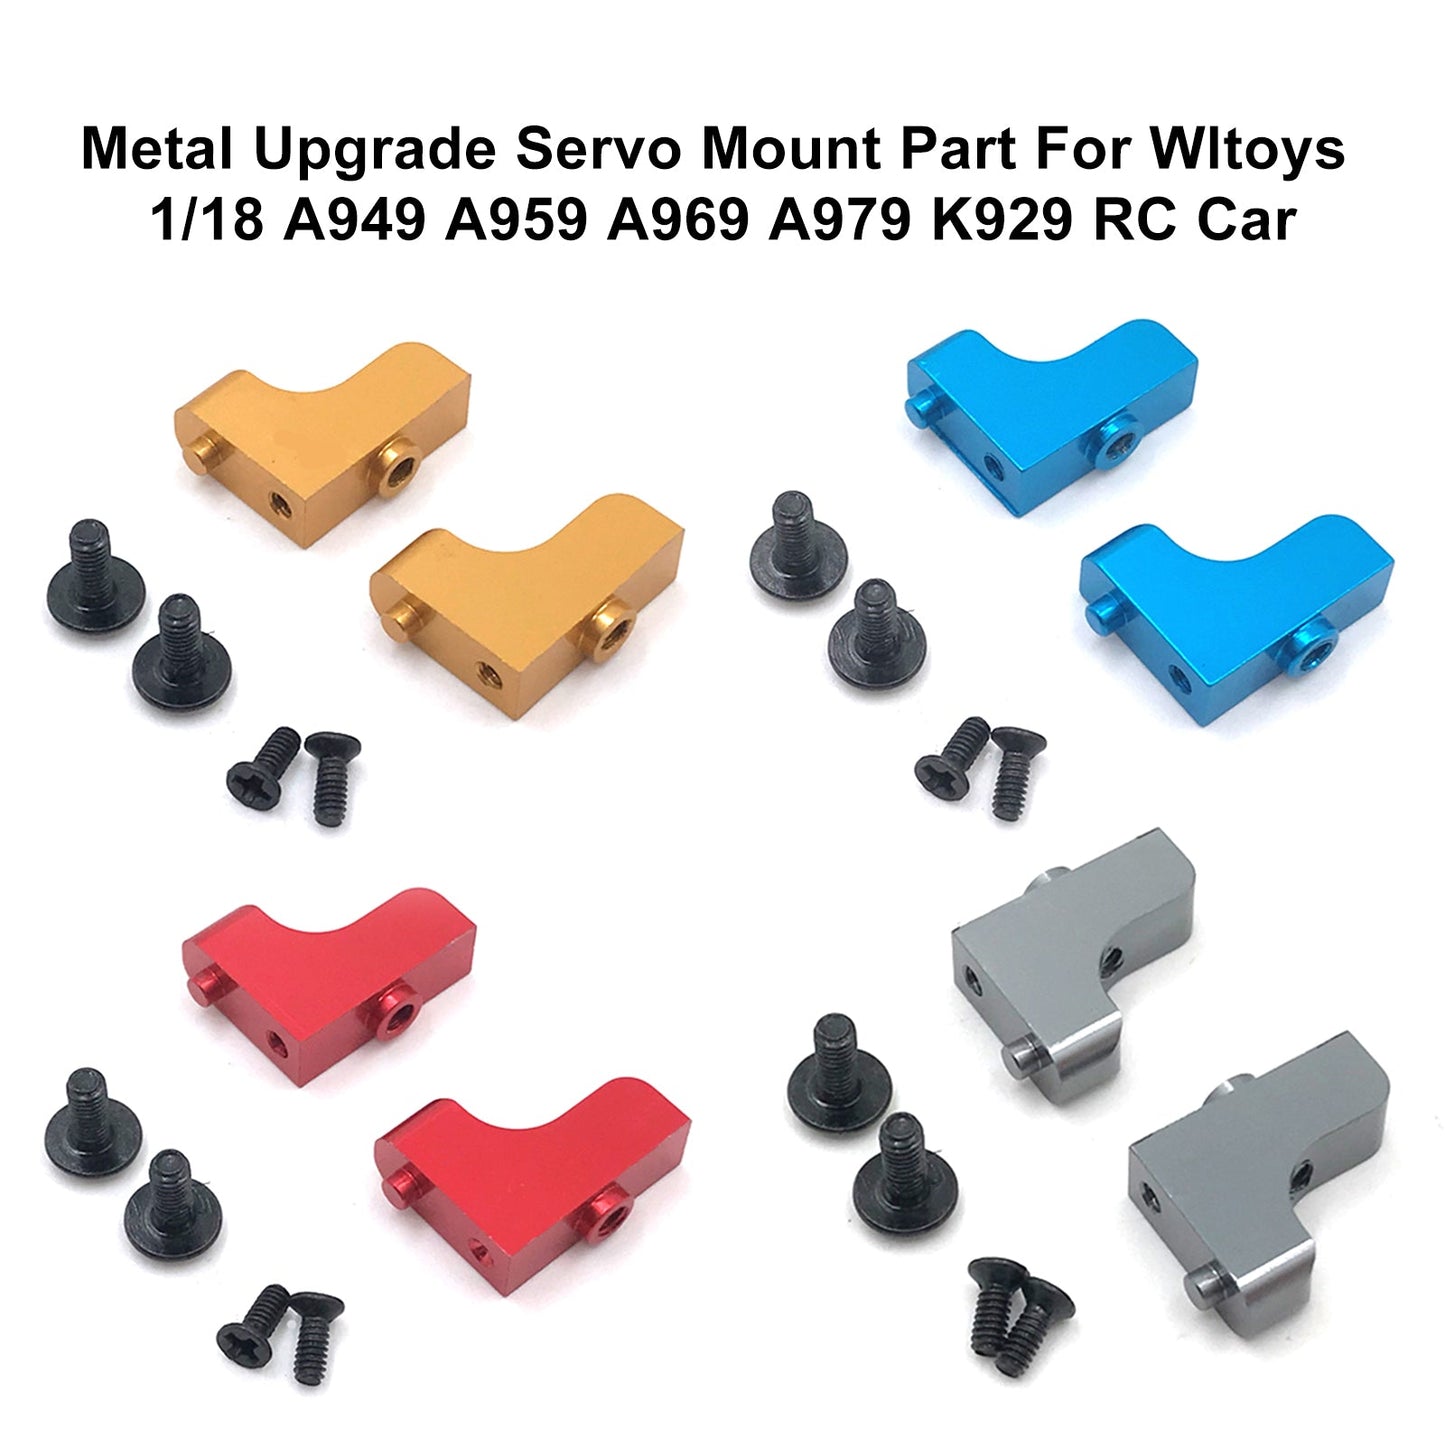 Metal Upgrade Servo Mount Part For Wltoys 1/18 A949 A959 A969 A979 K929 RC Car